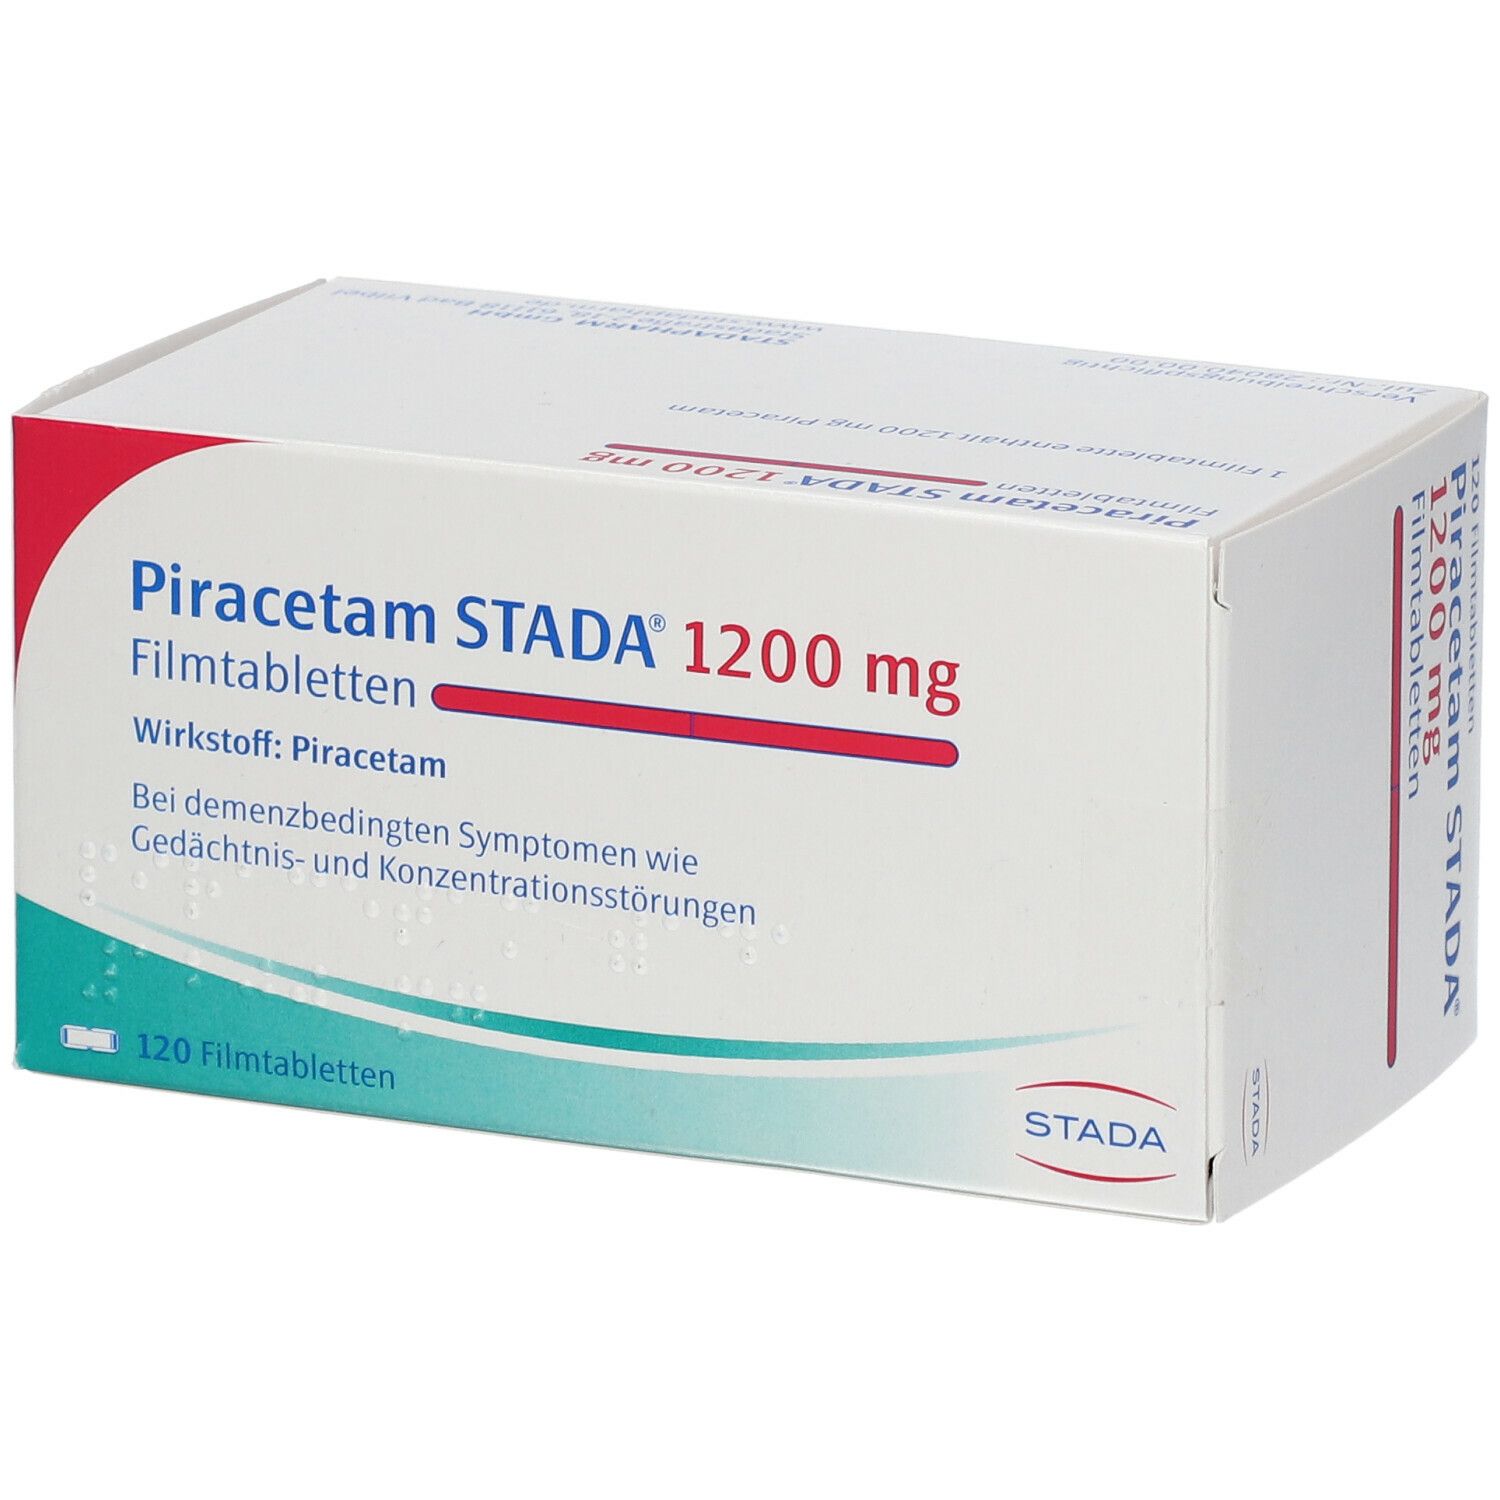 Piracetam STADA® 1200 mg